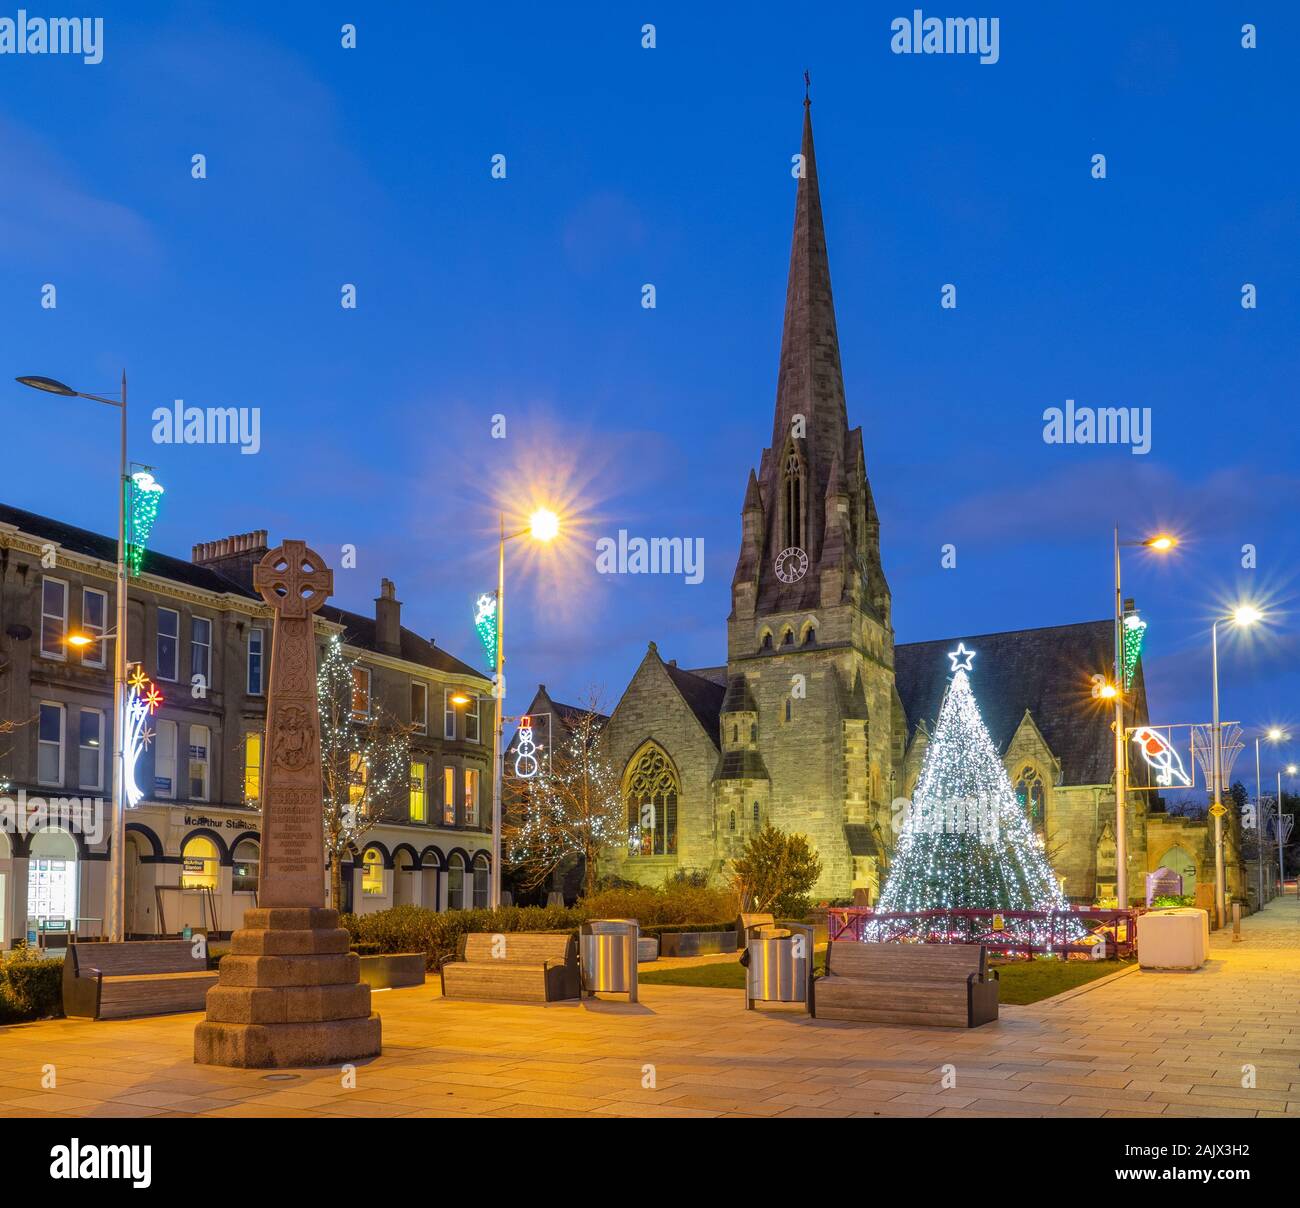 Helensburgh Square at Christmas Stock Photo